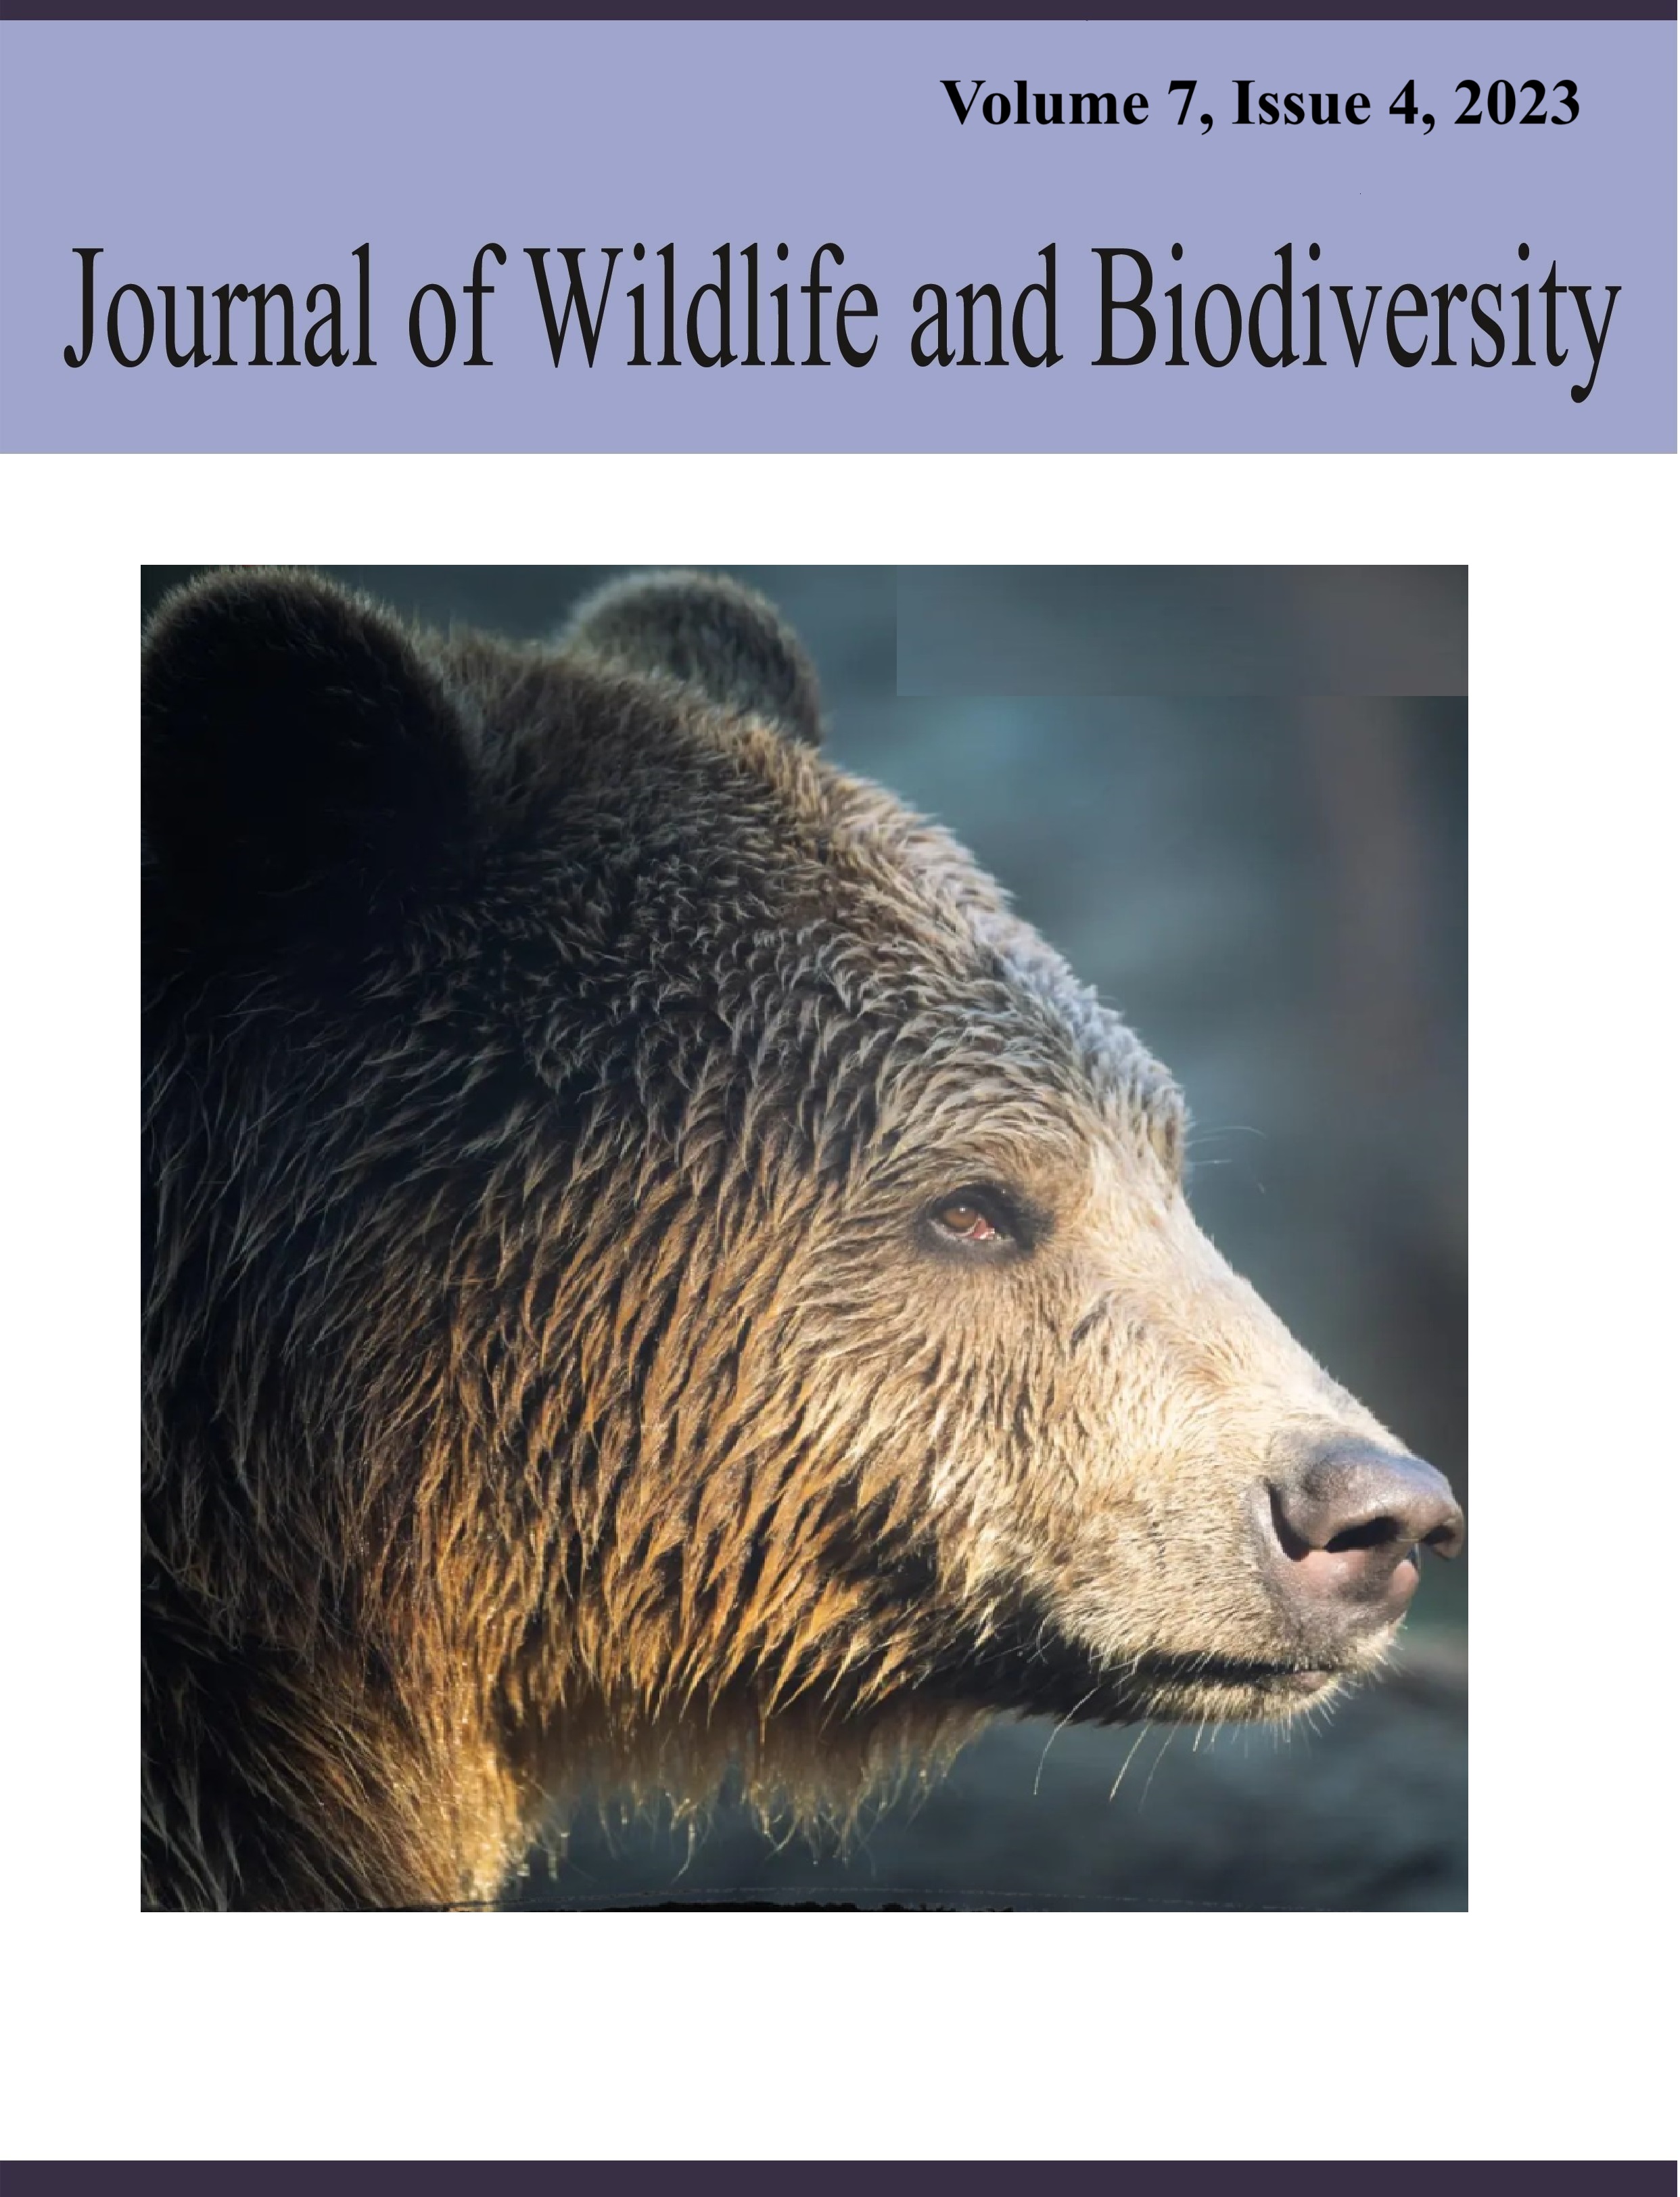 					View Vol. 7 No. 4 (2023): Journal of Wildlife and Biodiversity
				